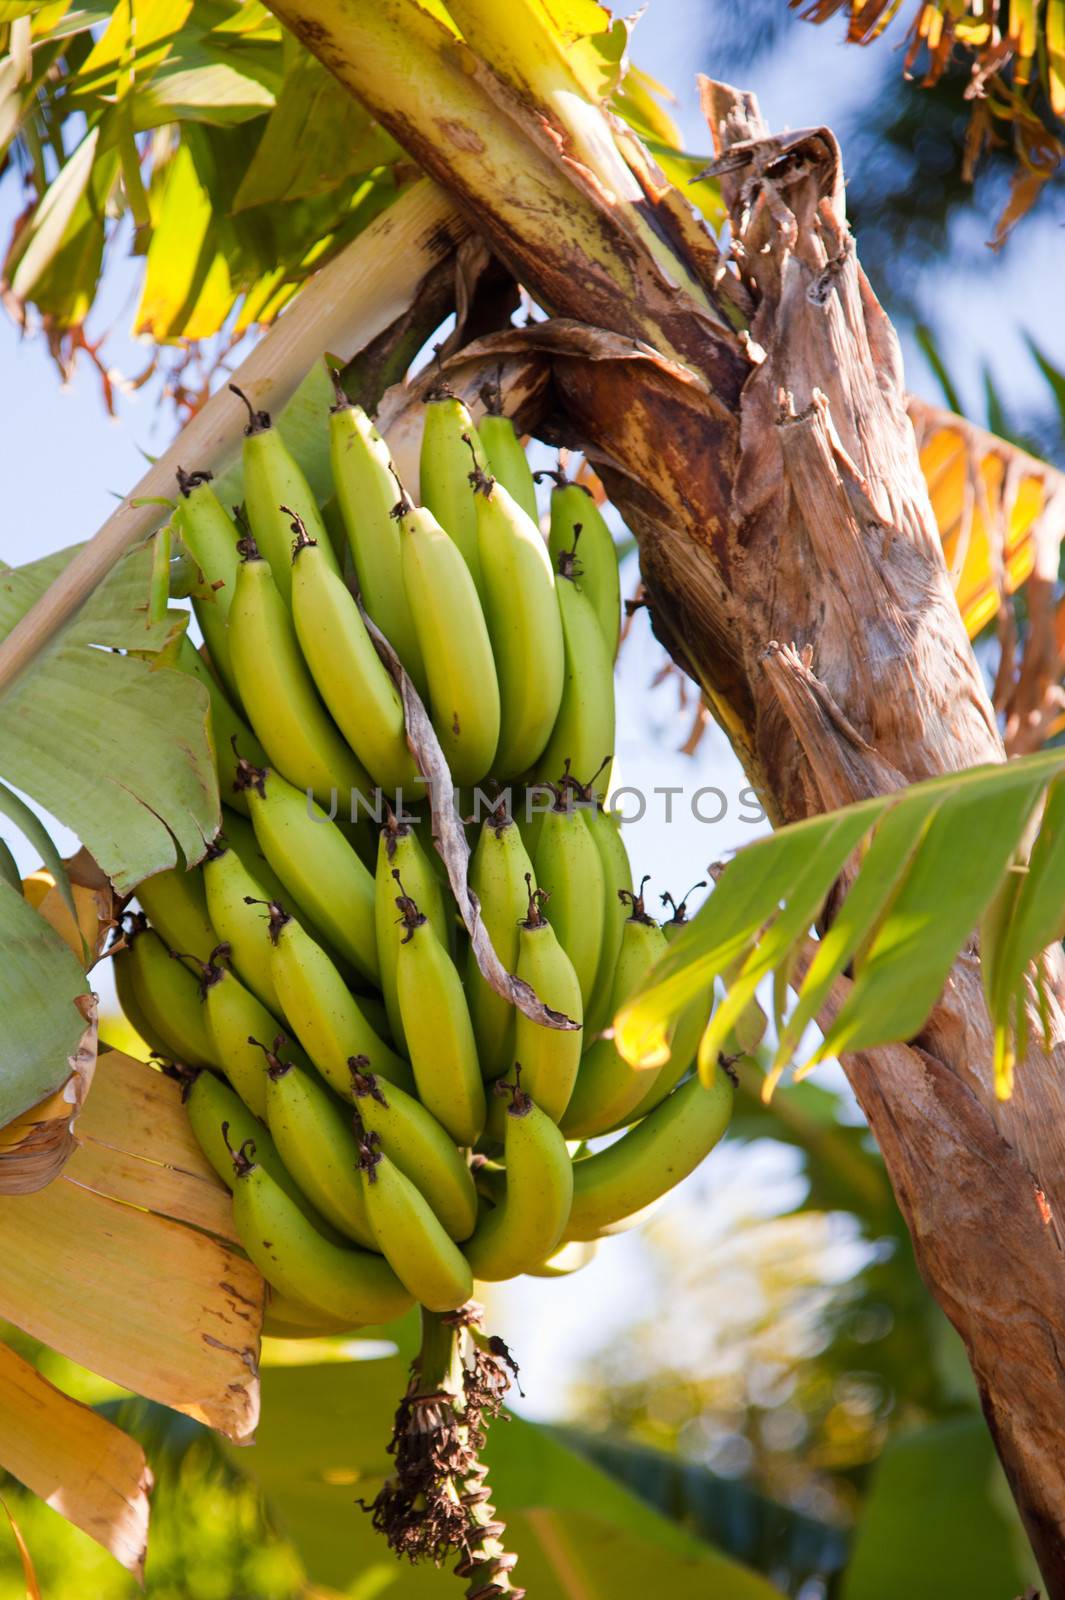 Banana Plant and Fruit by CelsoDiniz